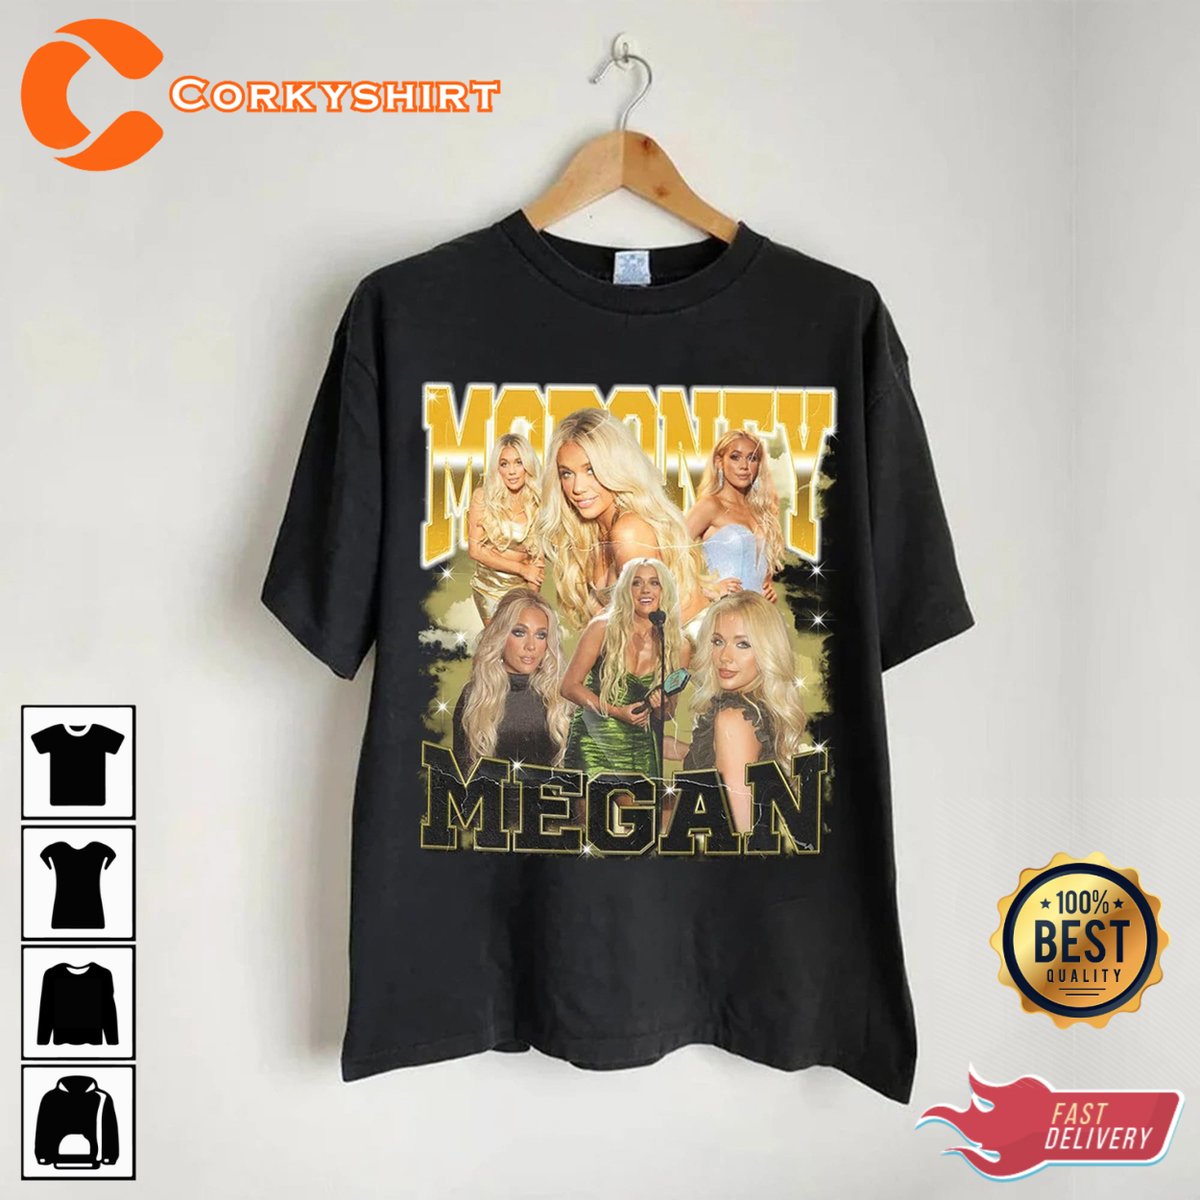 Megan Moroney Vintage 90s Shirt
corkyshirt.com/megan-moroney-…
Explore more Megan Moroney Shirts on #Corkyshirt.